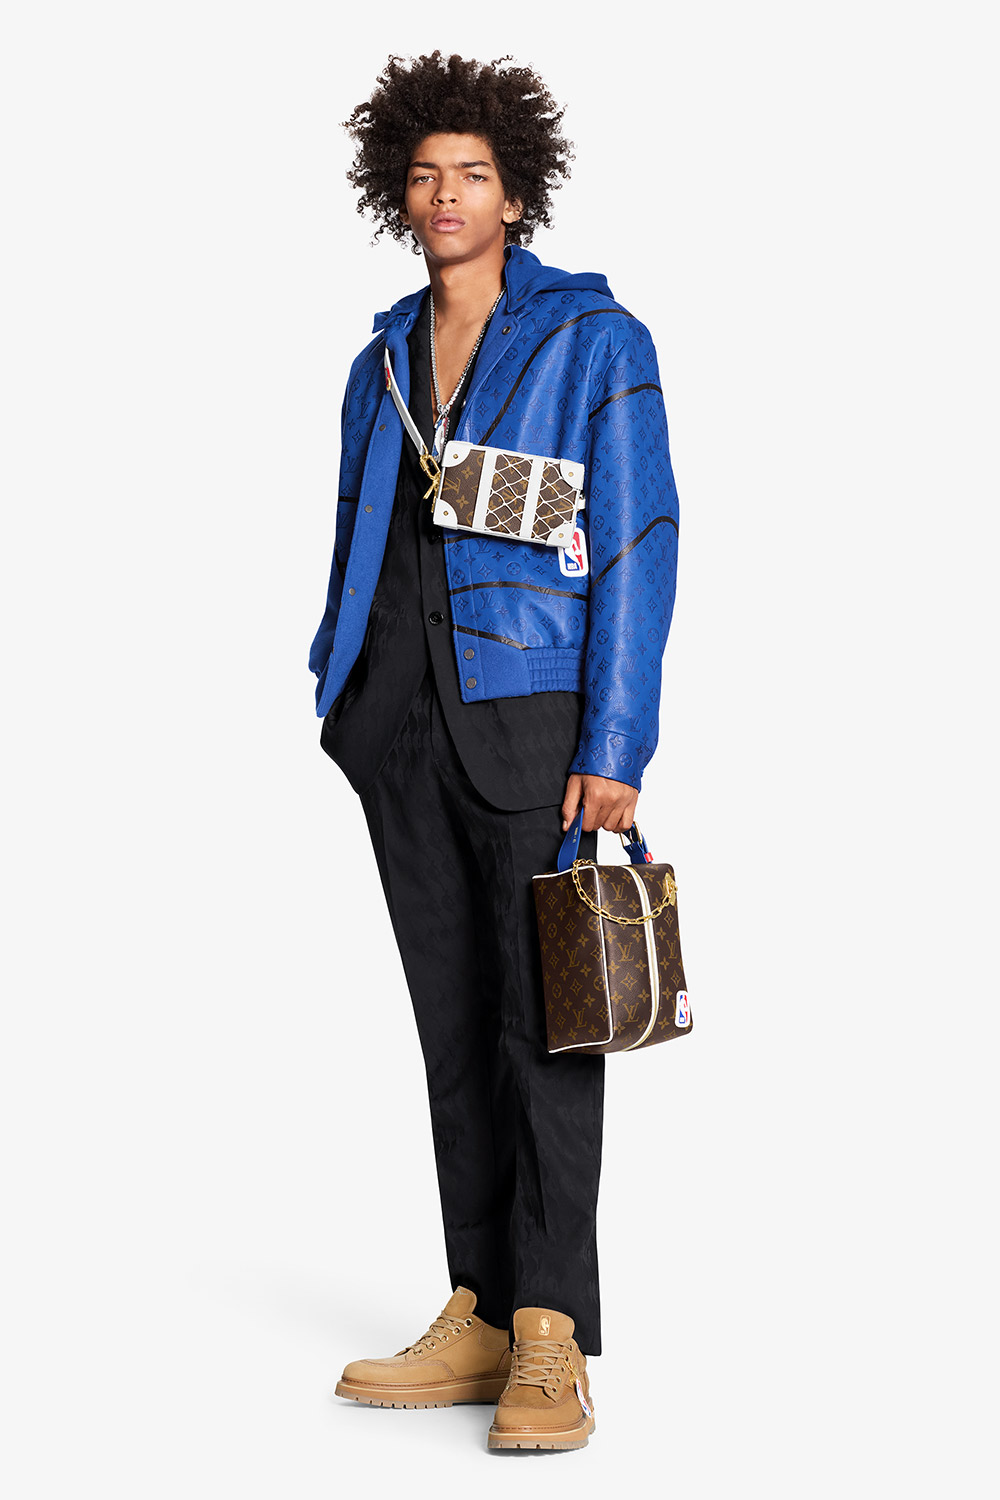 Louis Vuitton on X: Power player. @KaiaGerber wears a new all